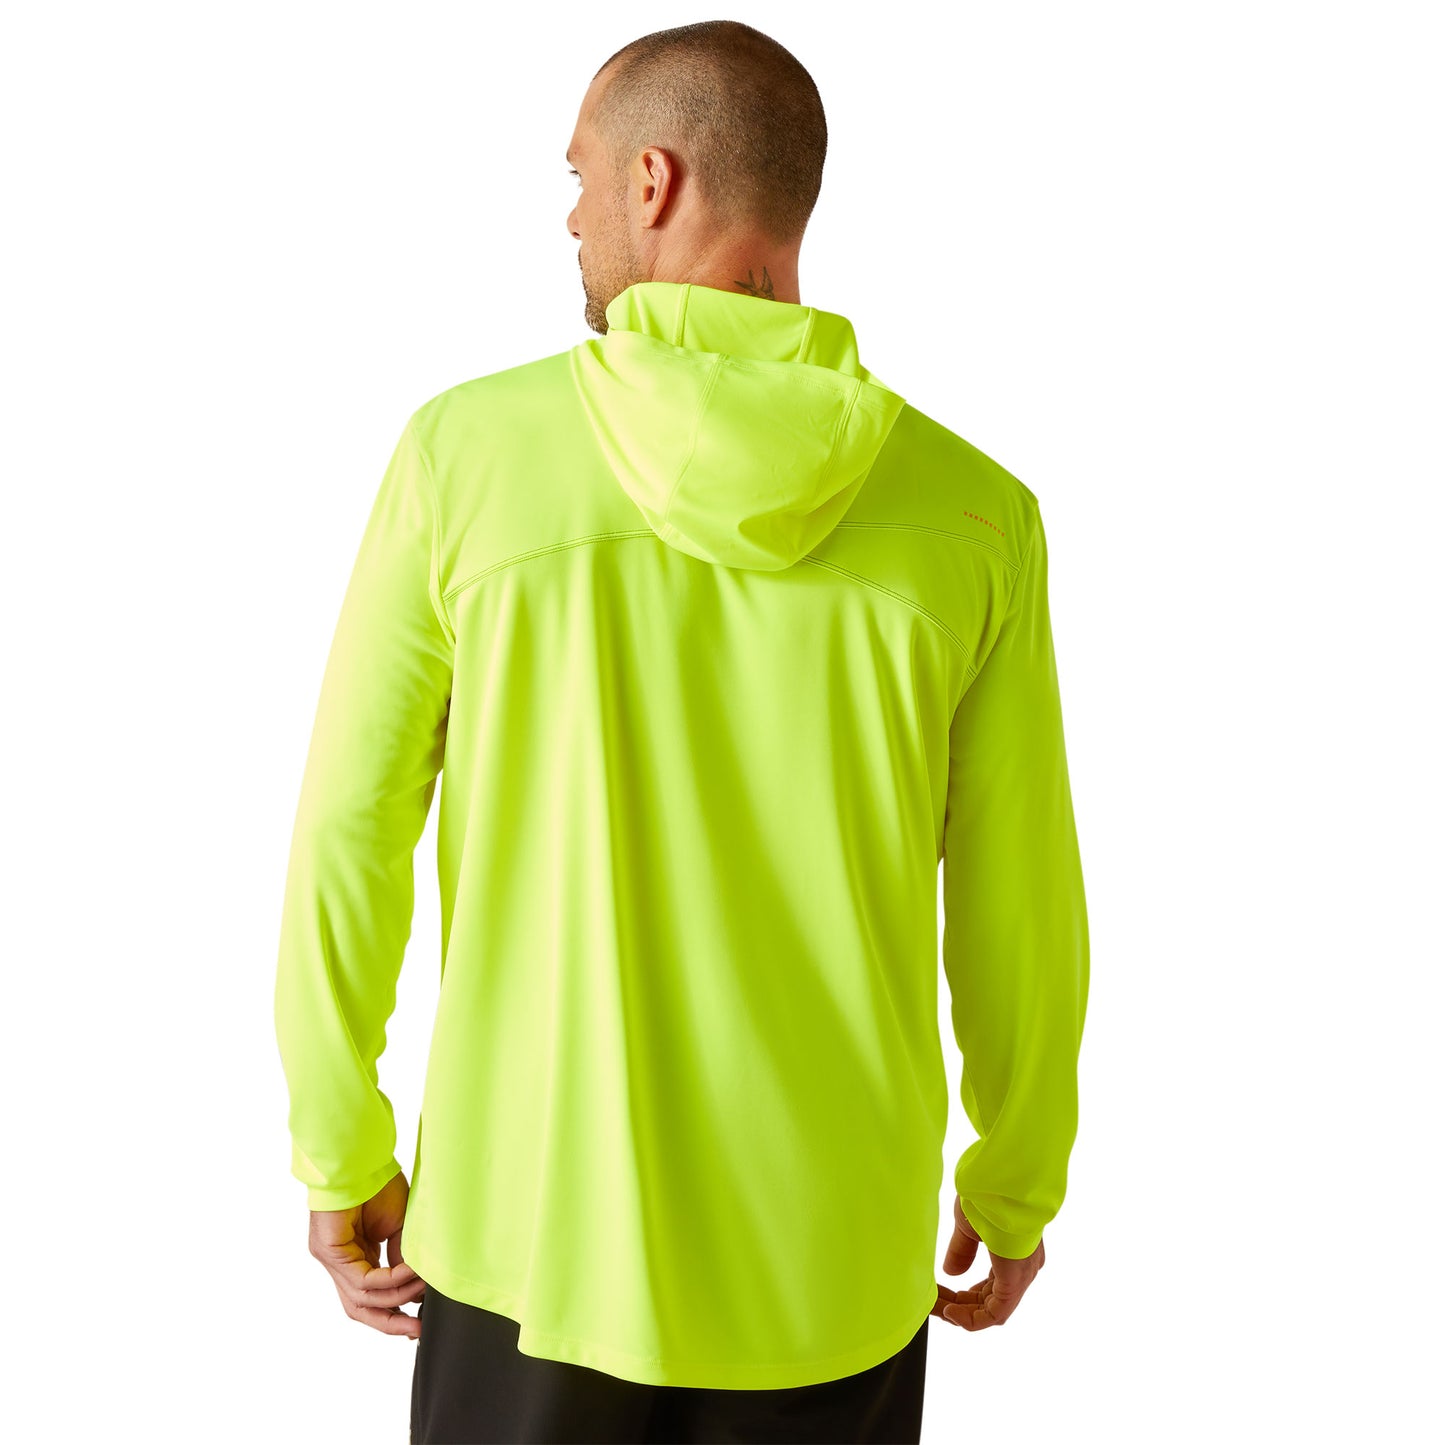 Ariat Men's Rebar Safety Yellow Sunblocker Shirt 10048978